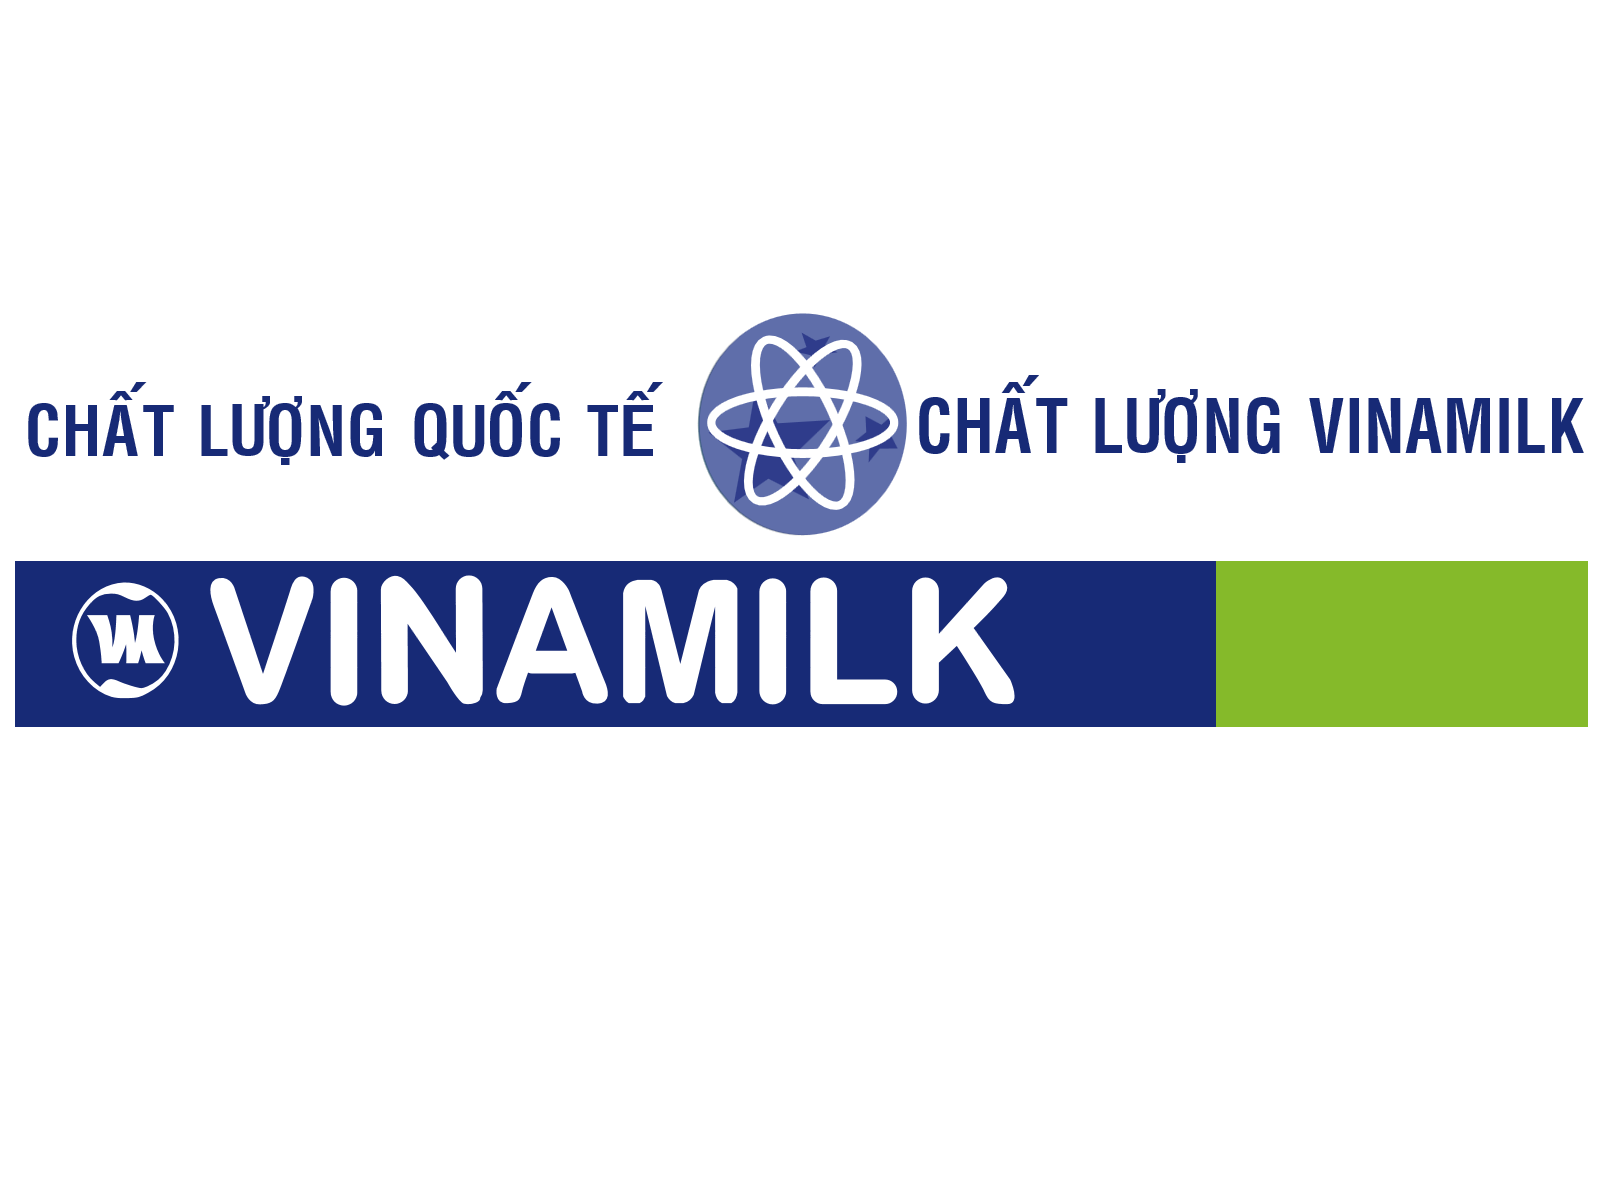 Logo Vinamilk Png - Vinamilk.png, Transparent background PNG HD thumbnail